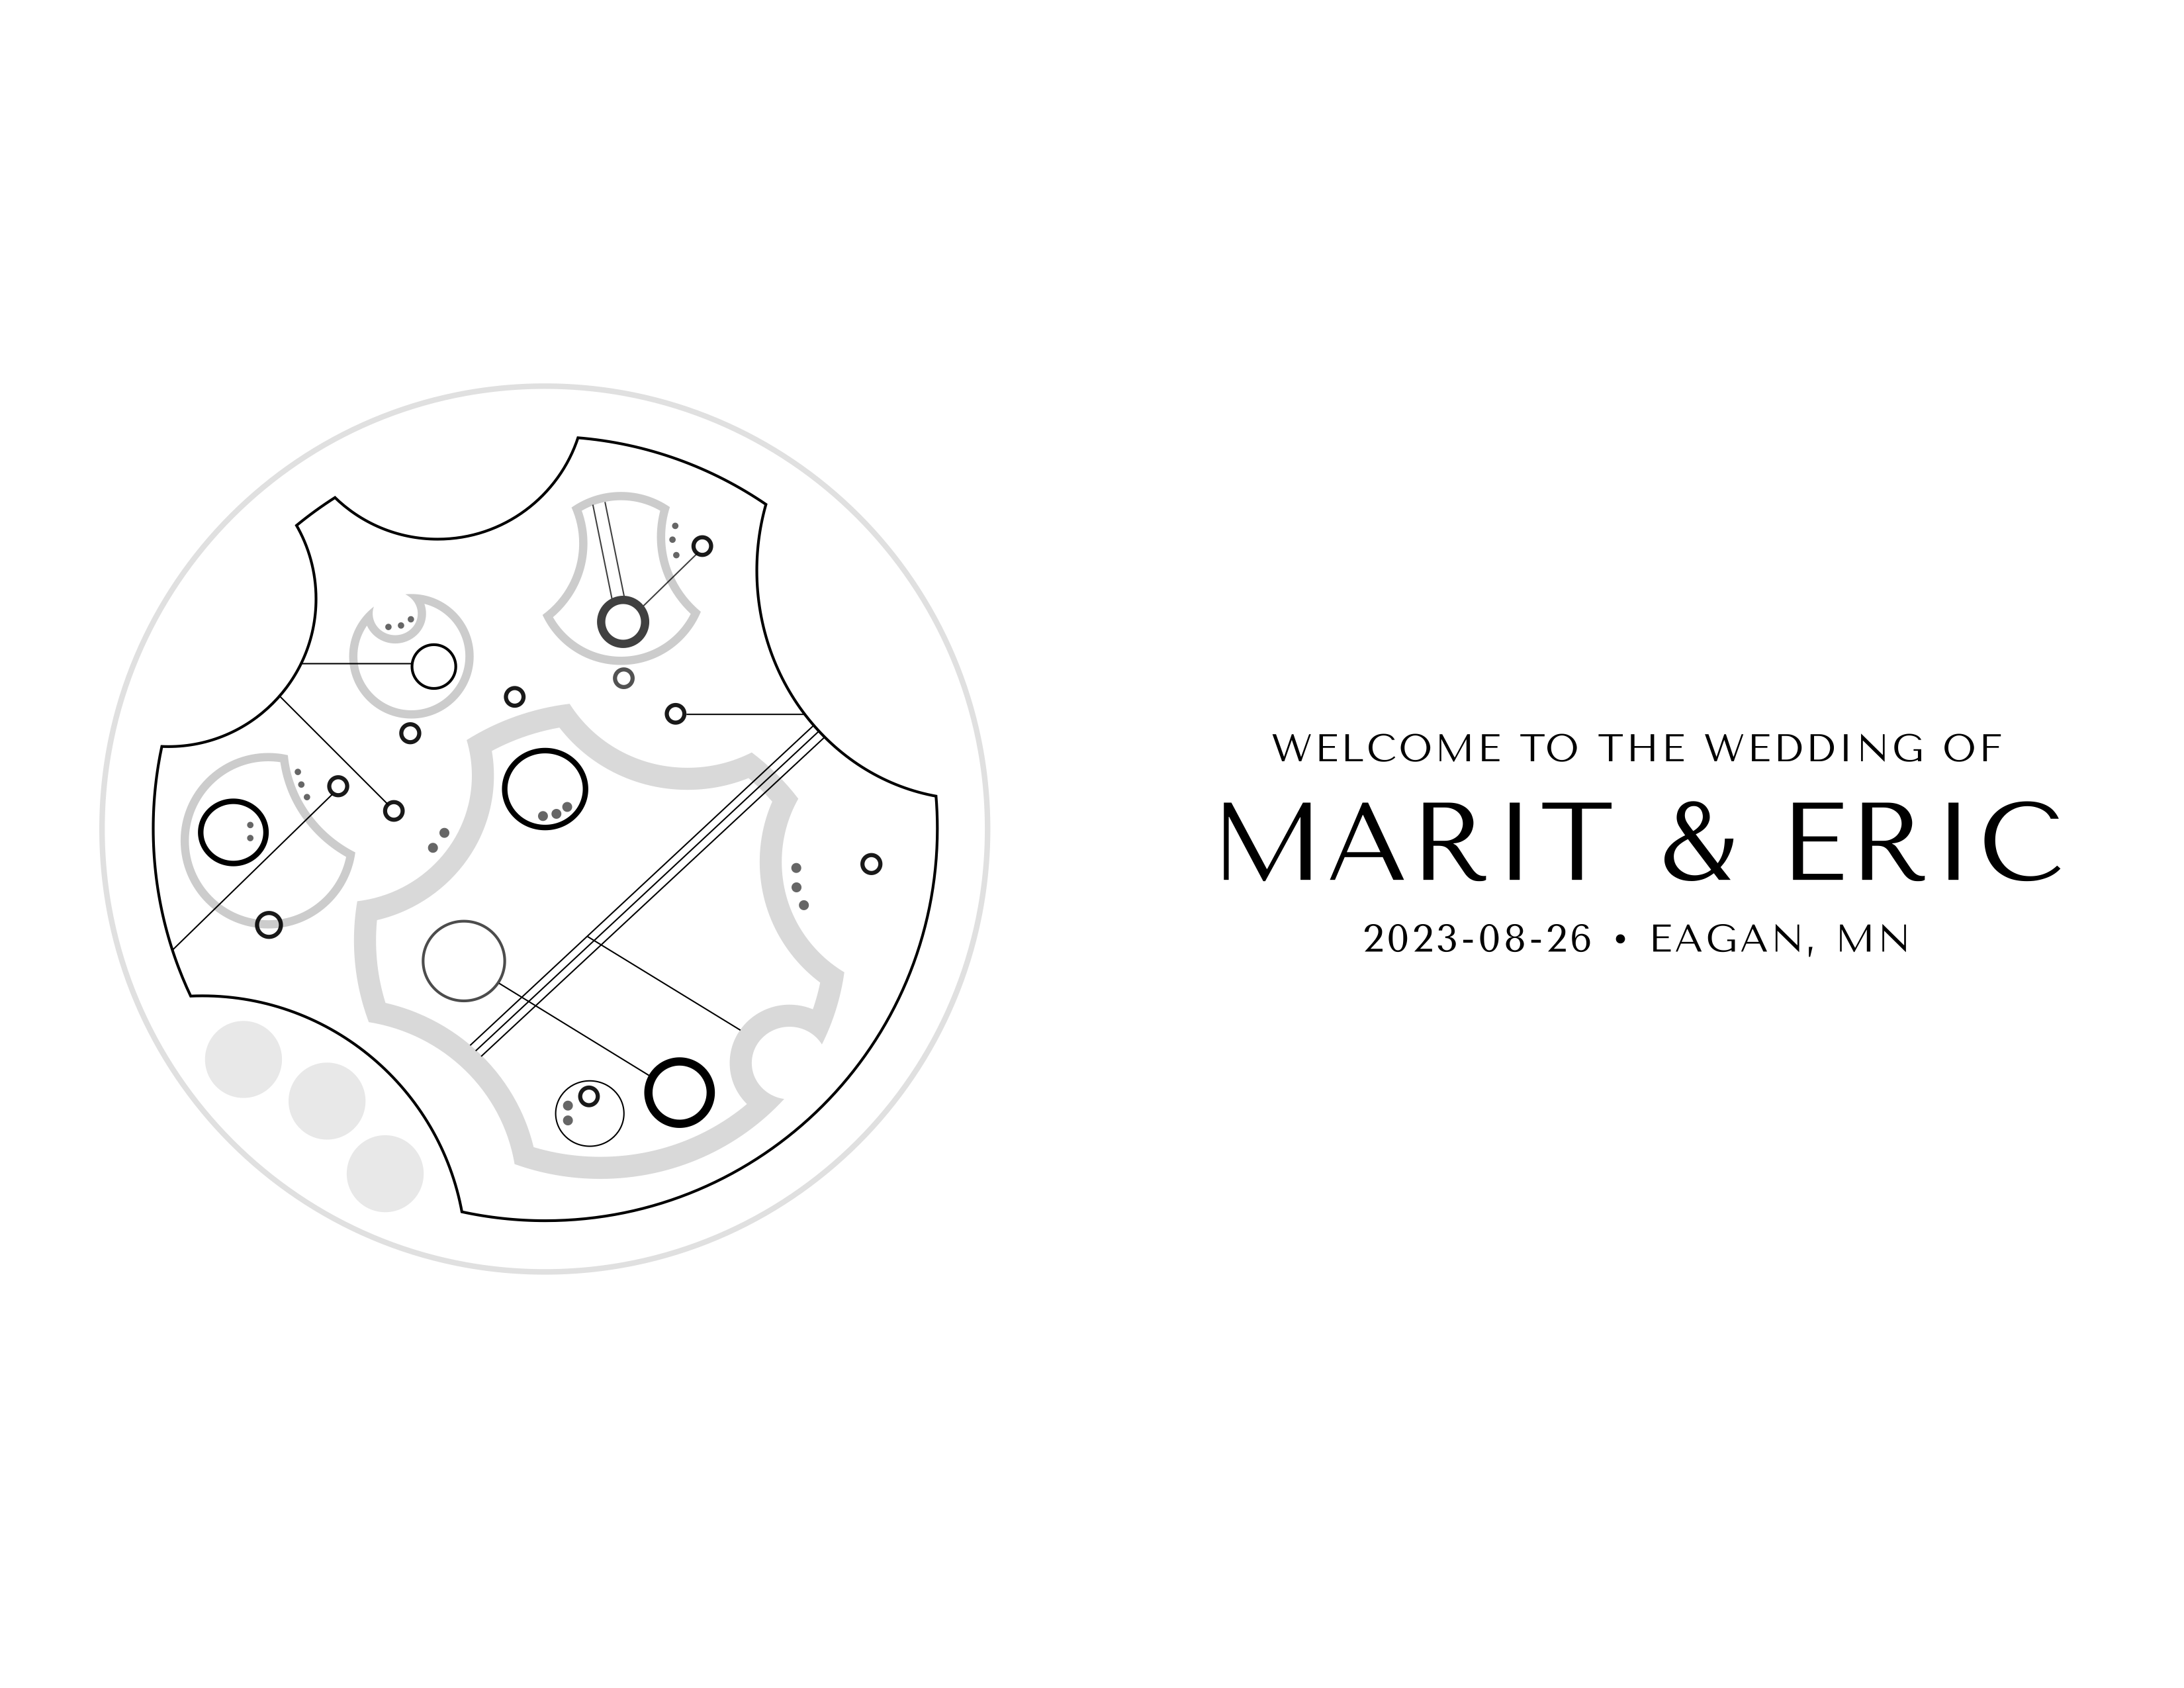 Front: Welcome to the wedding of Marit & Eric / 2023-08-26 Eagan, MN Back: Circular Gallifreyan design using varying shades of black and grey